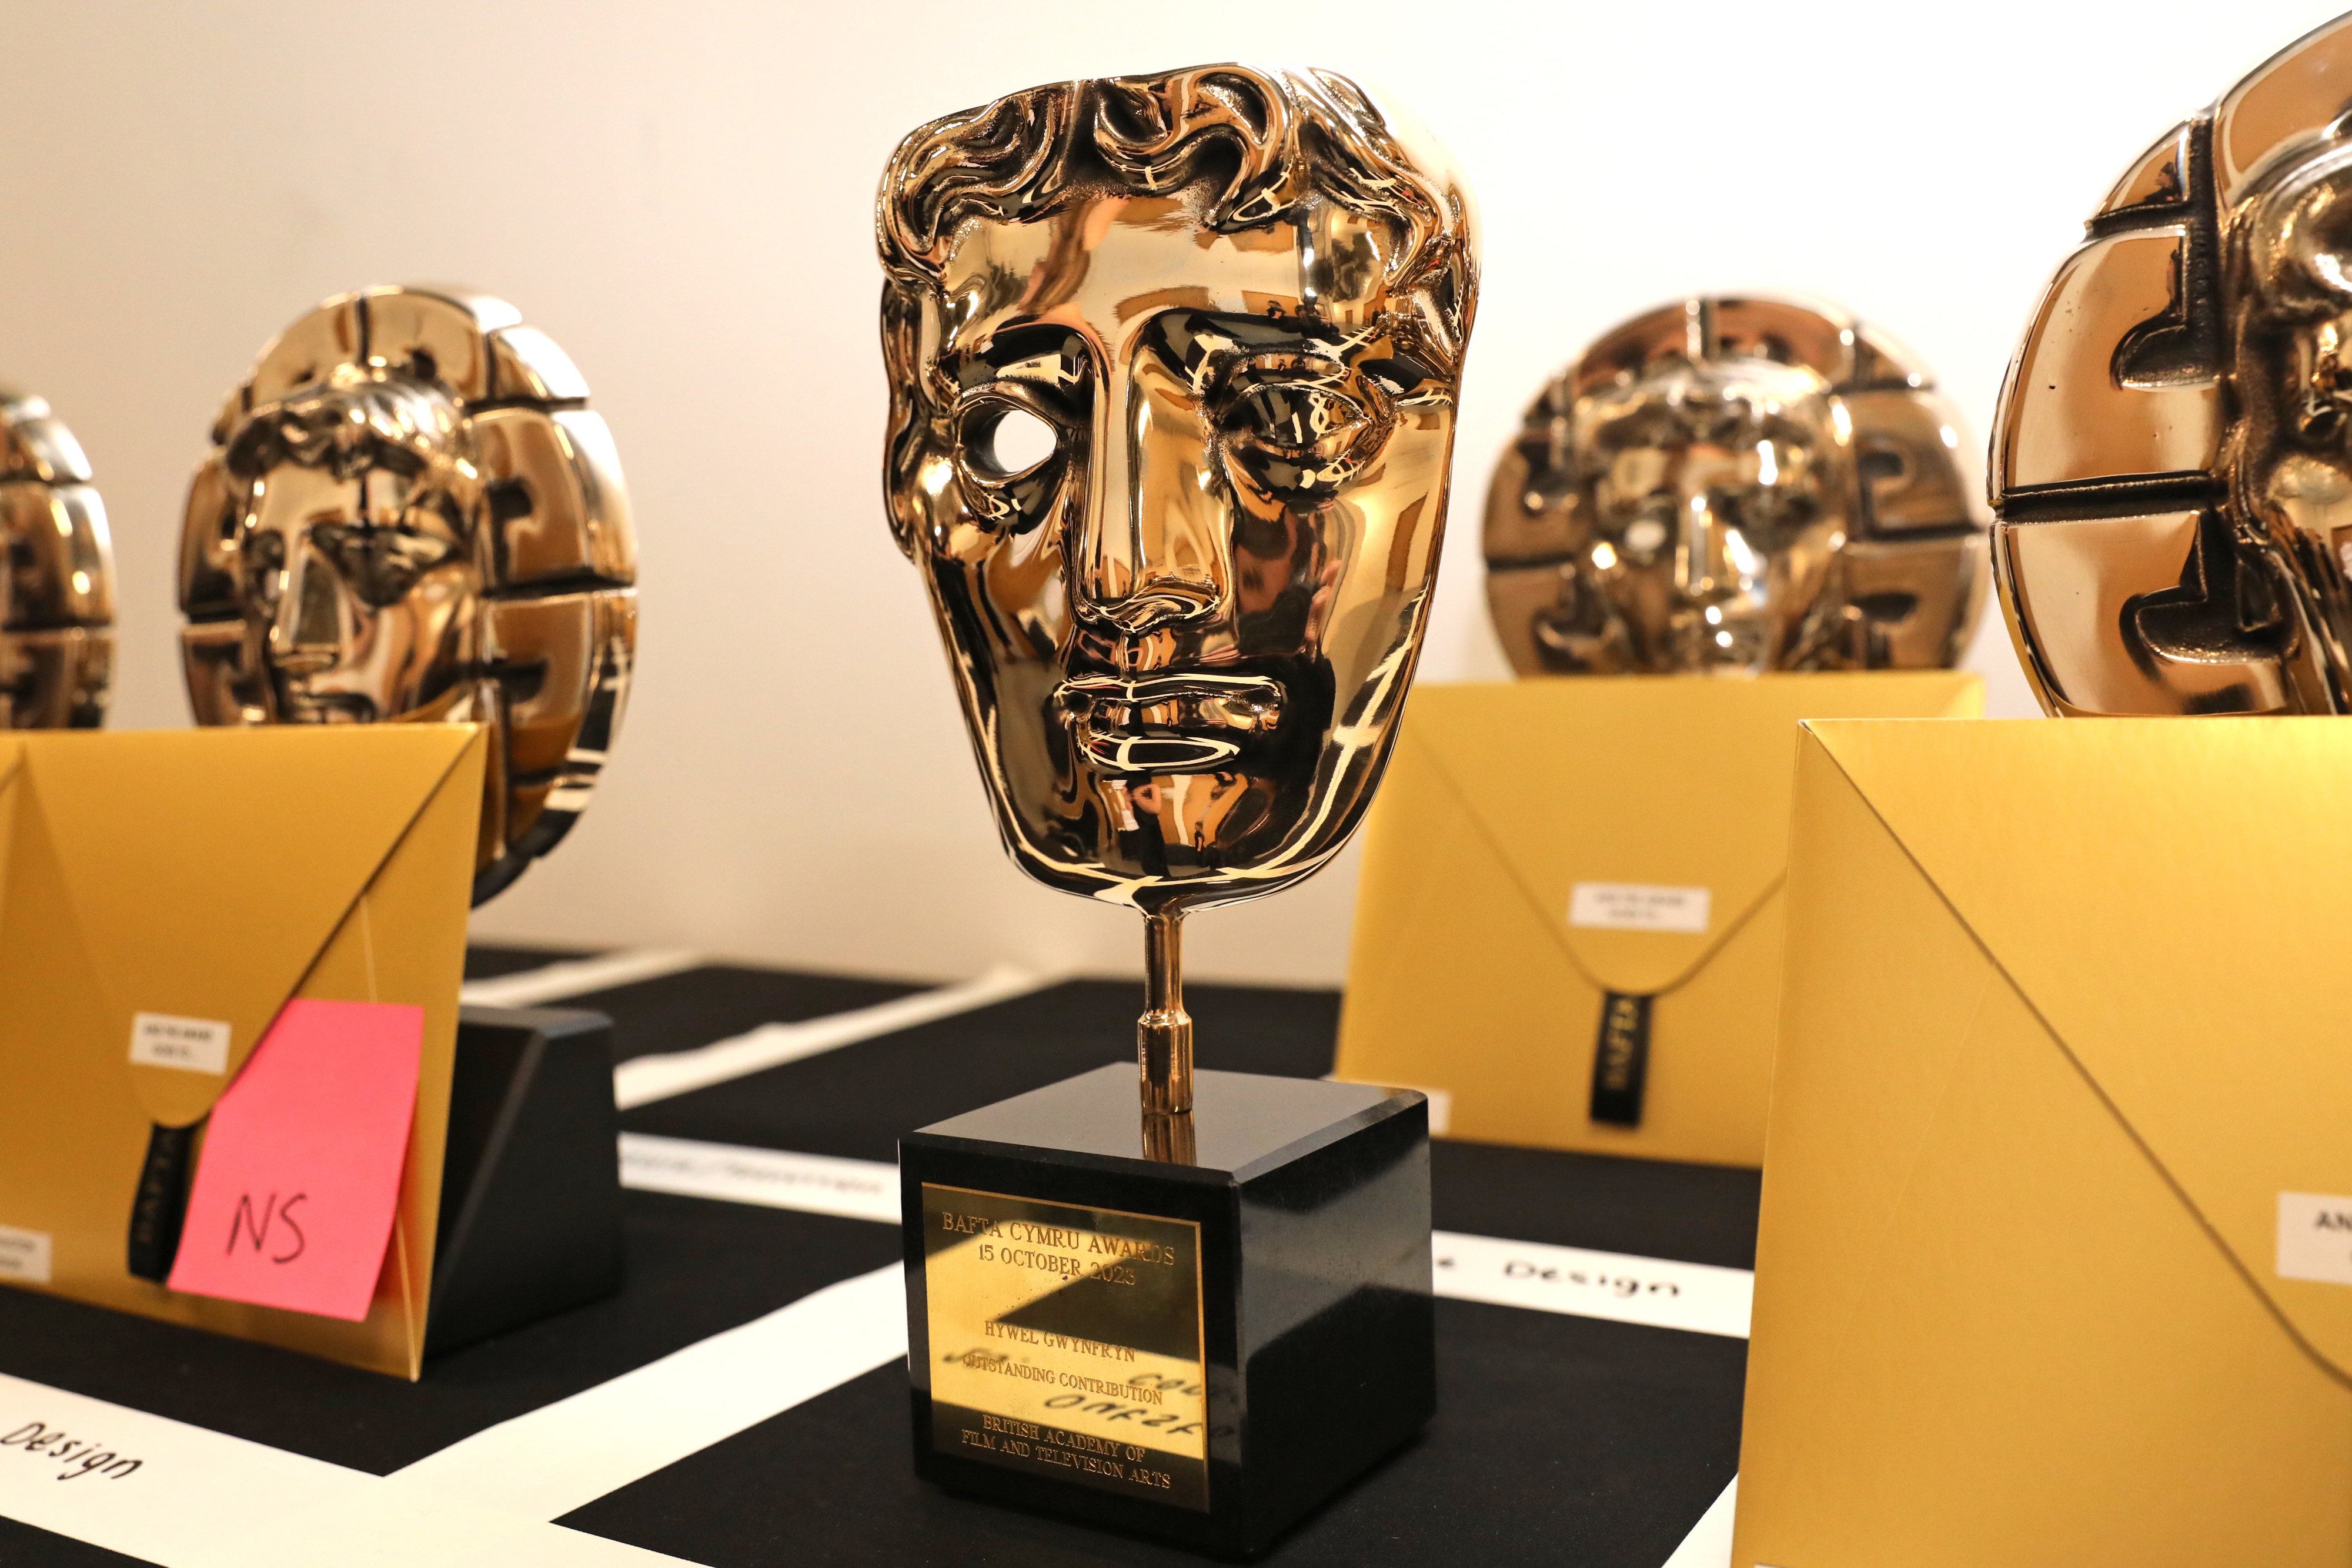 BAFTA awards lined up